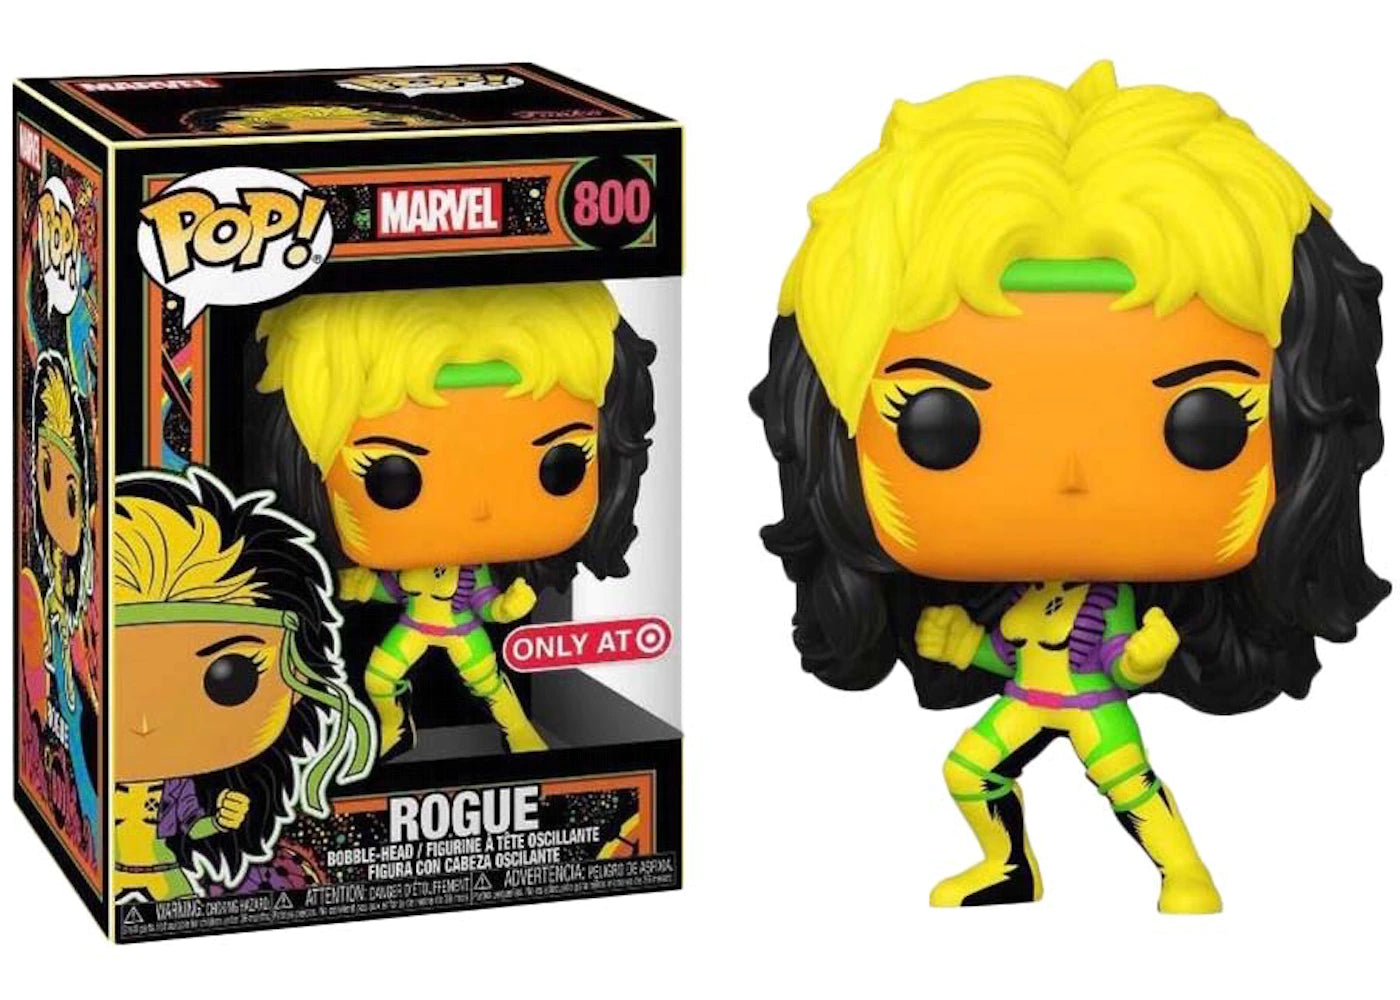 Funko Pop! Marvel Rogue Target Exclusive (Blacklight) Bobble-Head Figure #800